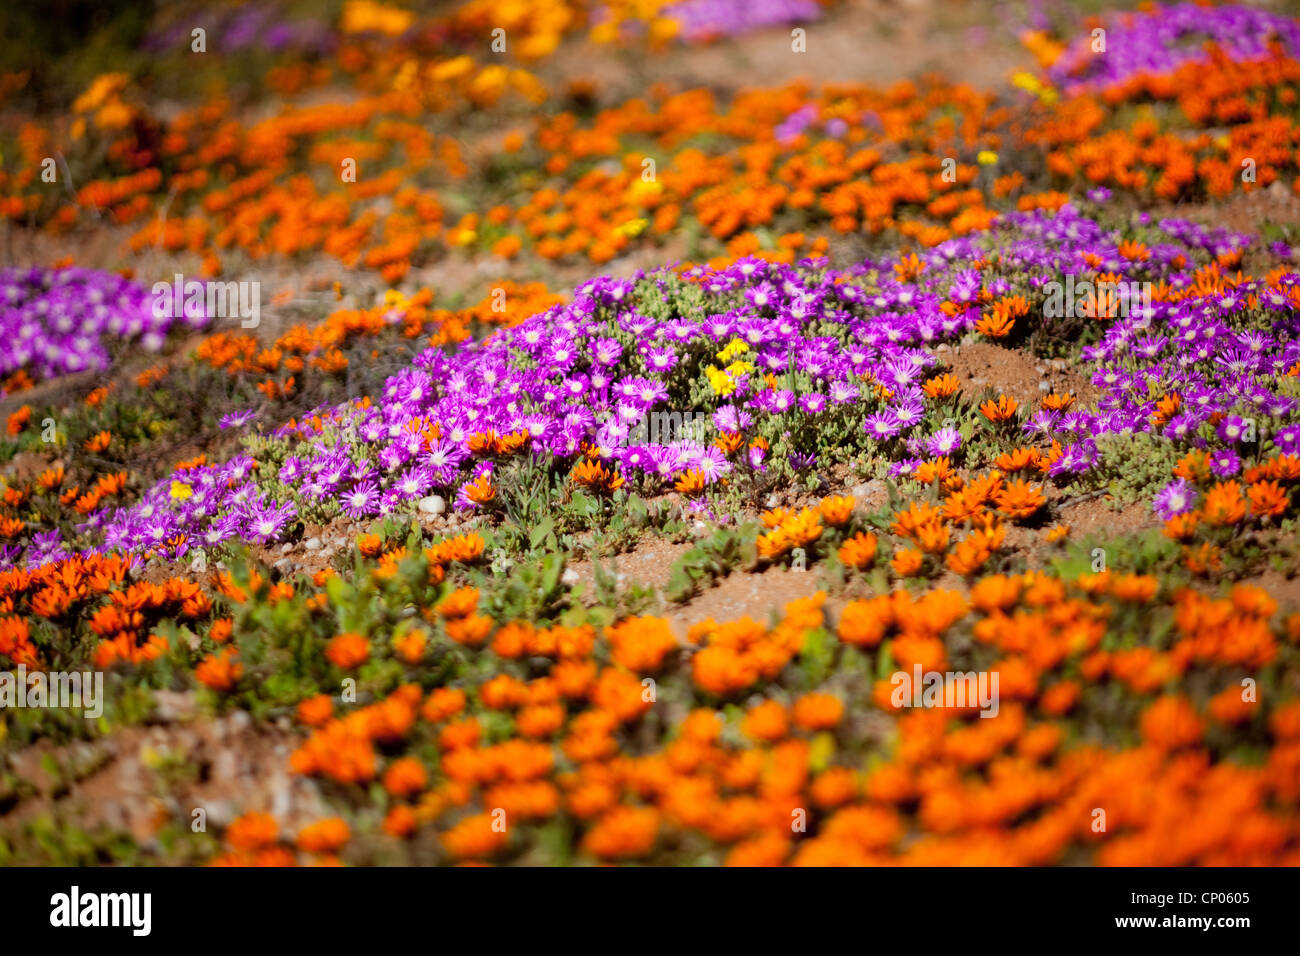 flower carpet with Drosanthemum hispidum (violet) and Gorteria diffusa (orange), South Africa, Northern Cape, Namaqualand Stock Photo